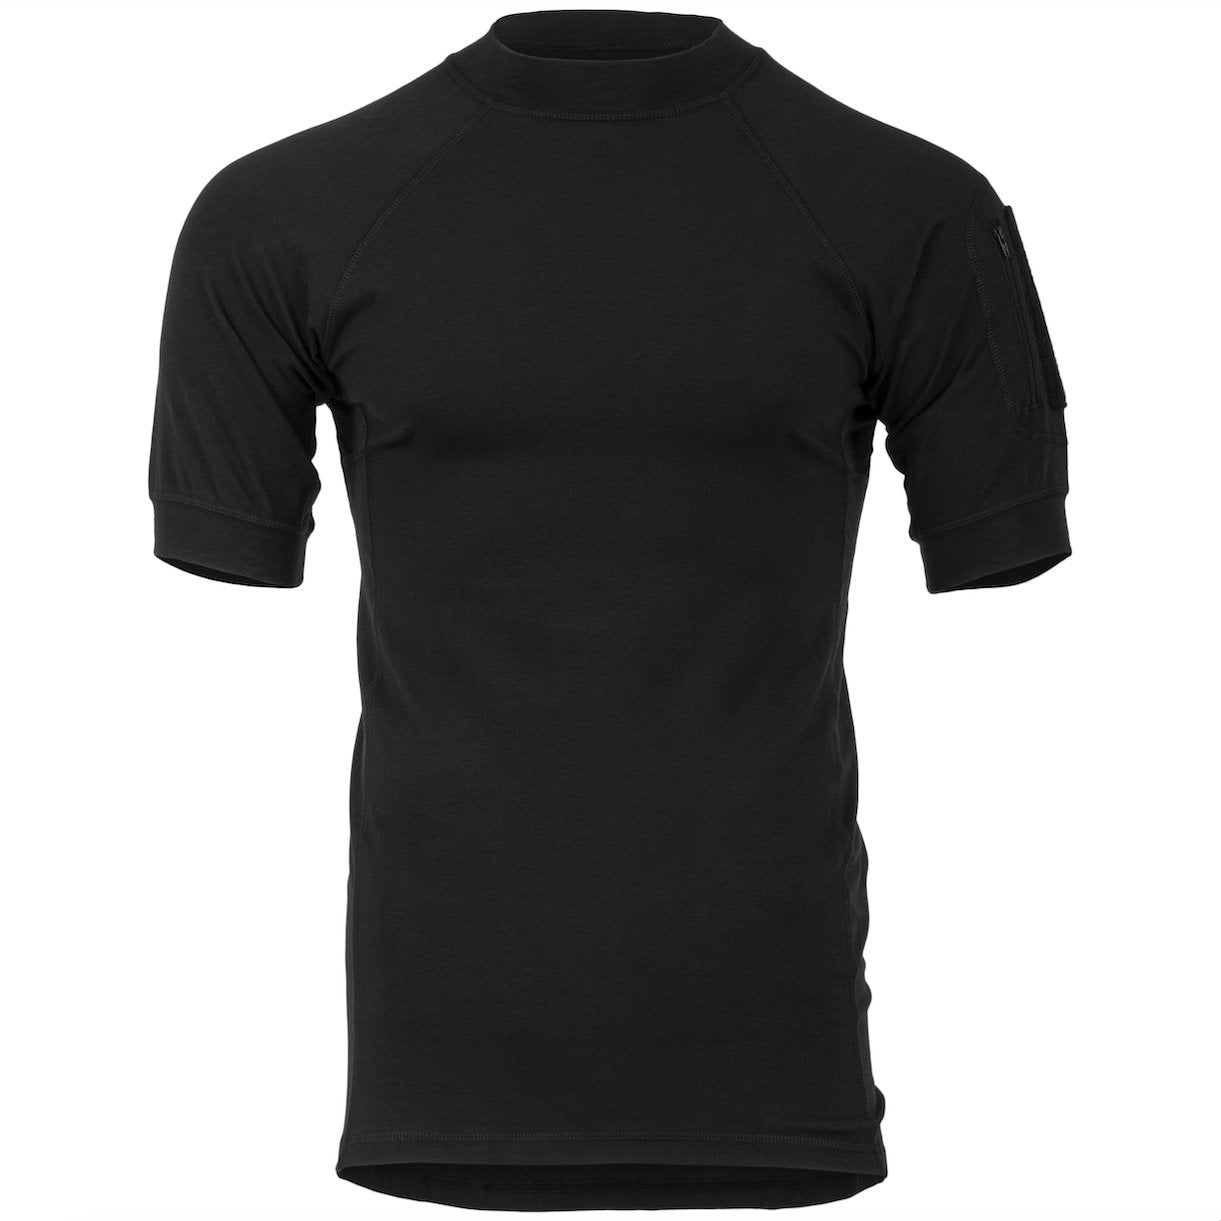 Highlander Combat T-Shirt Men's Black